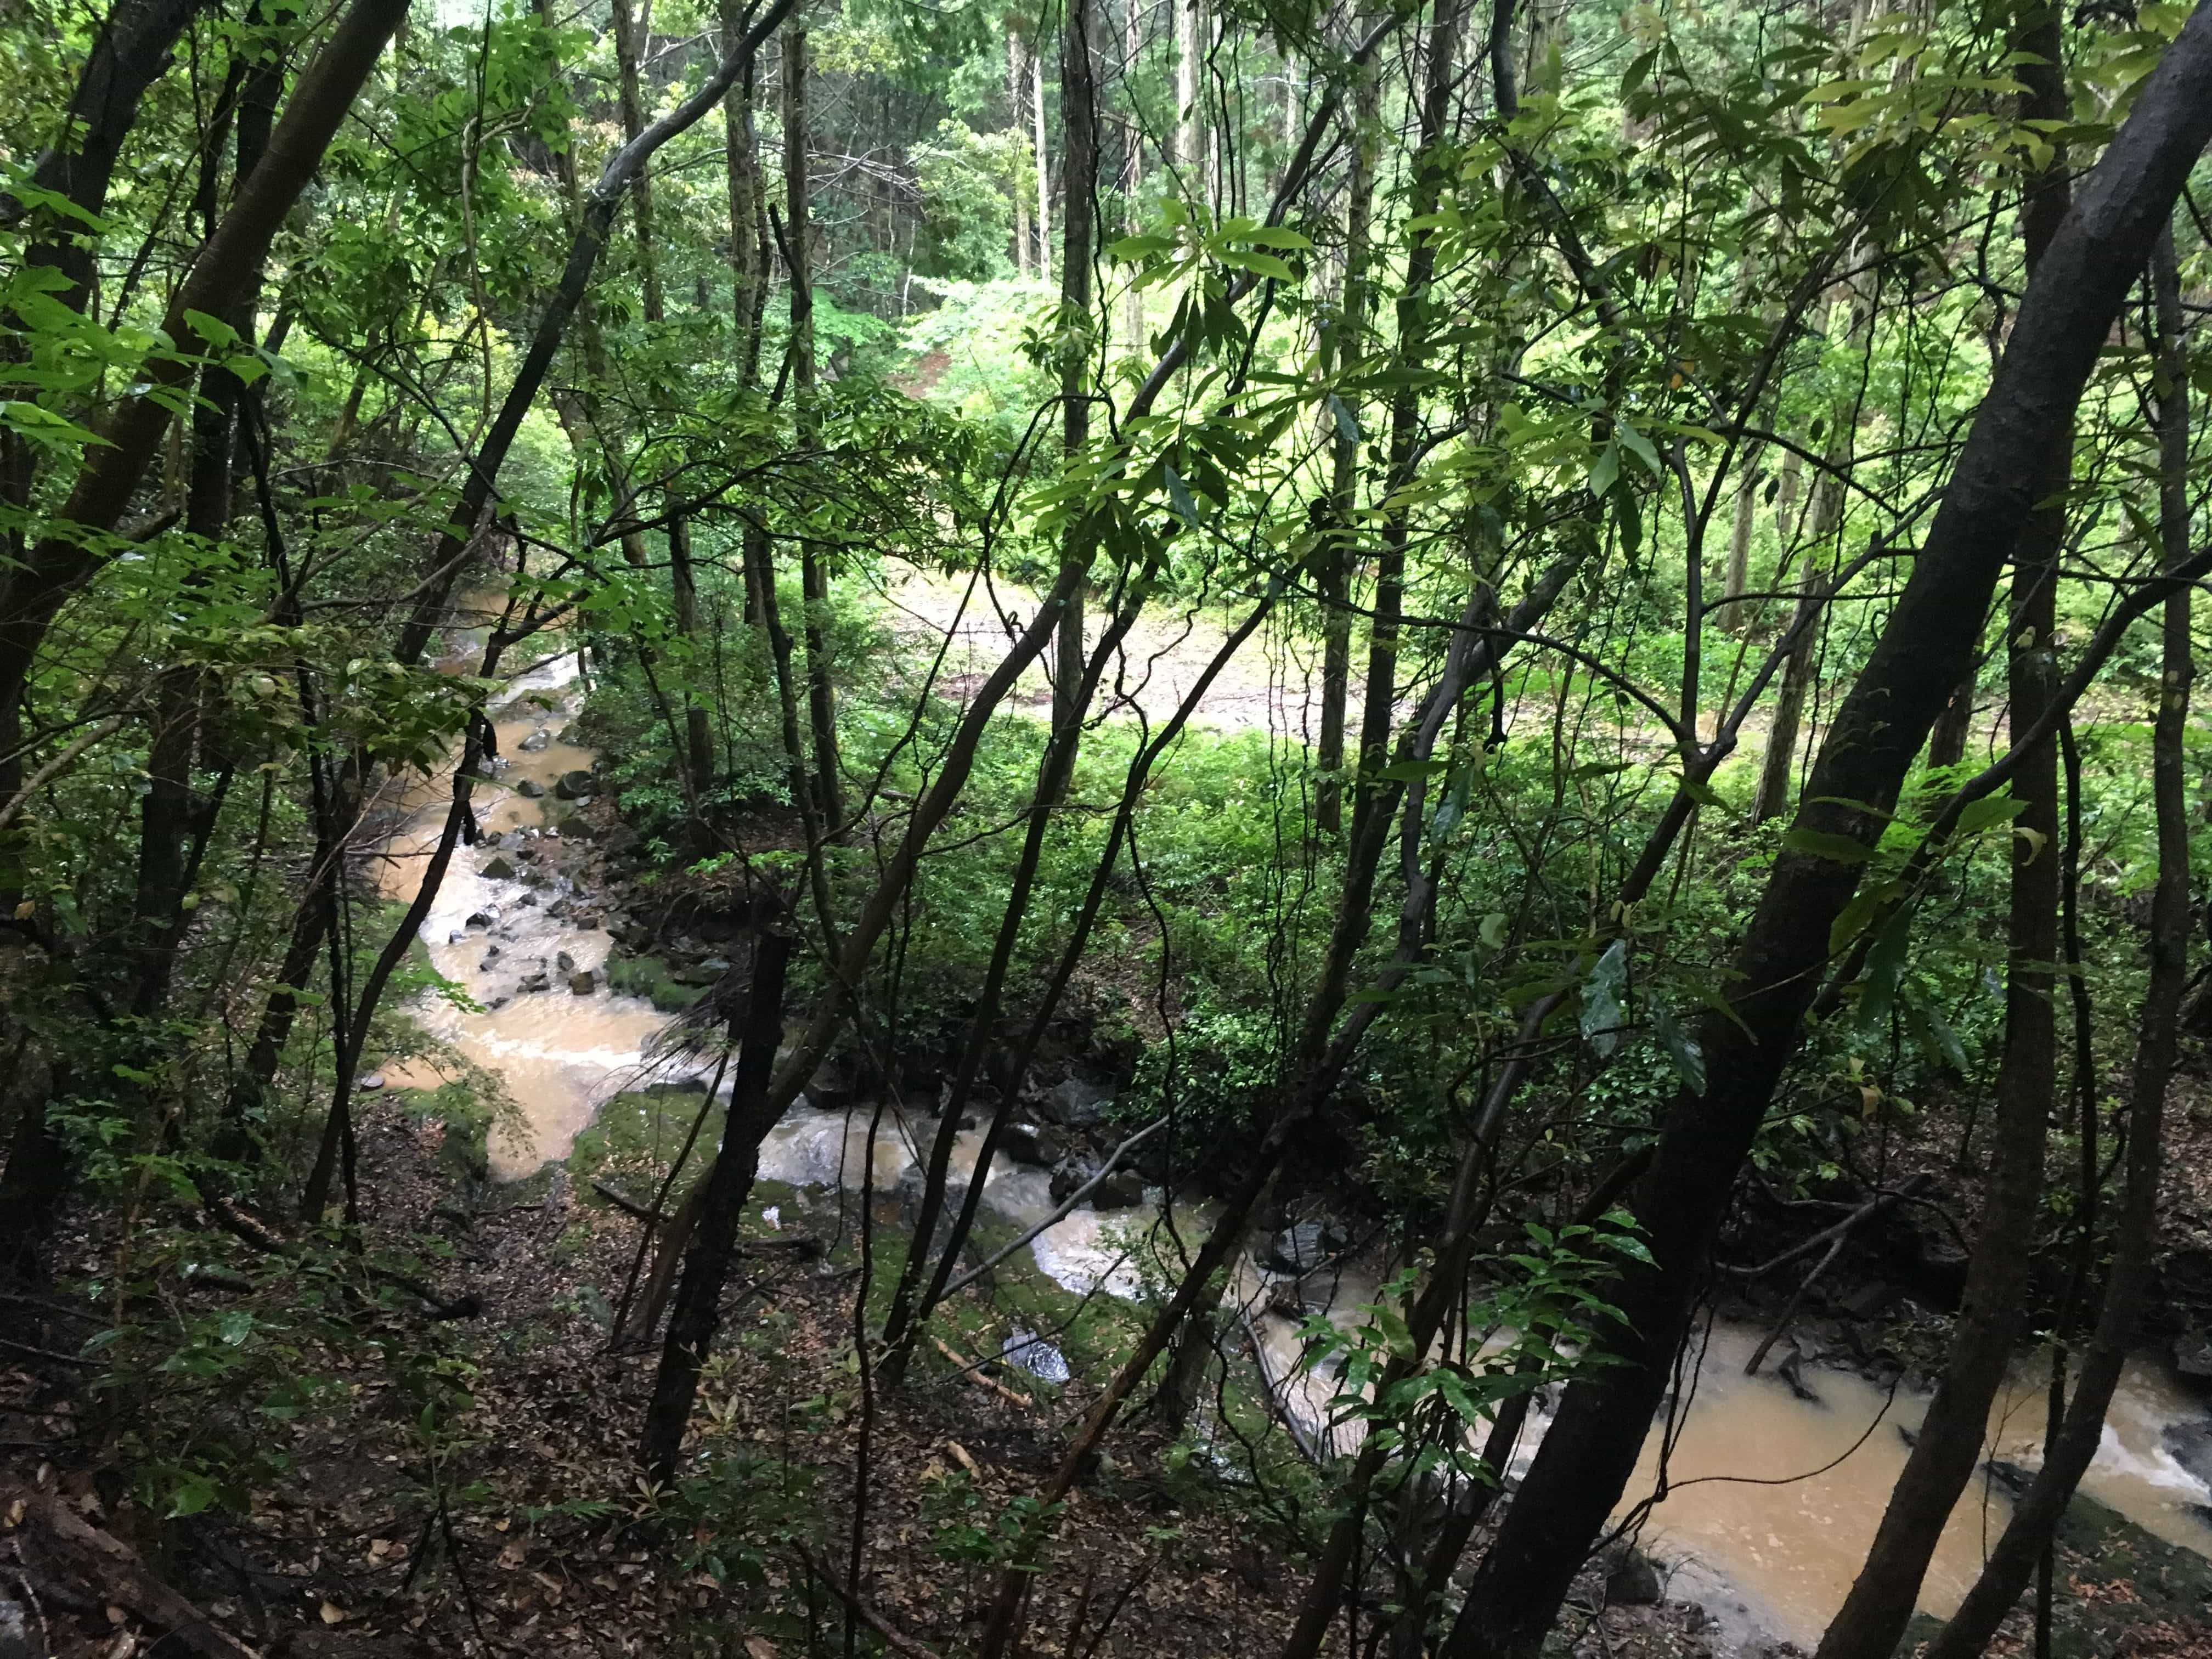 Muddy stream